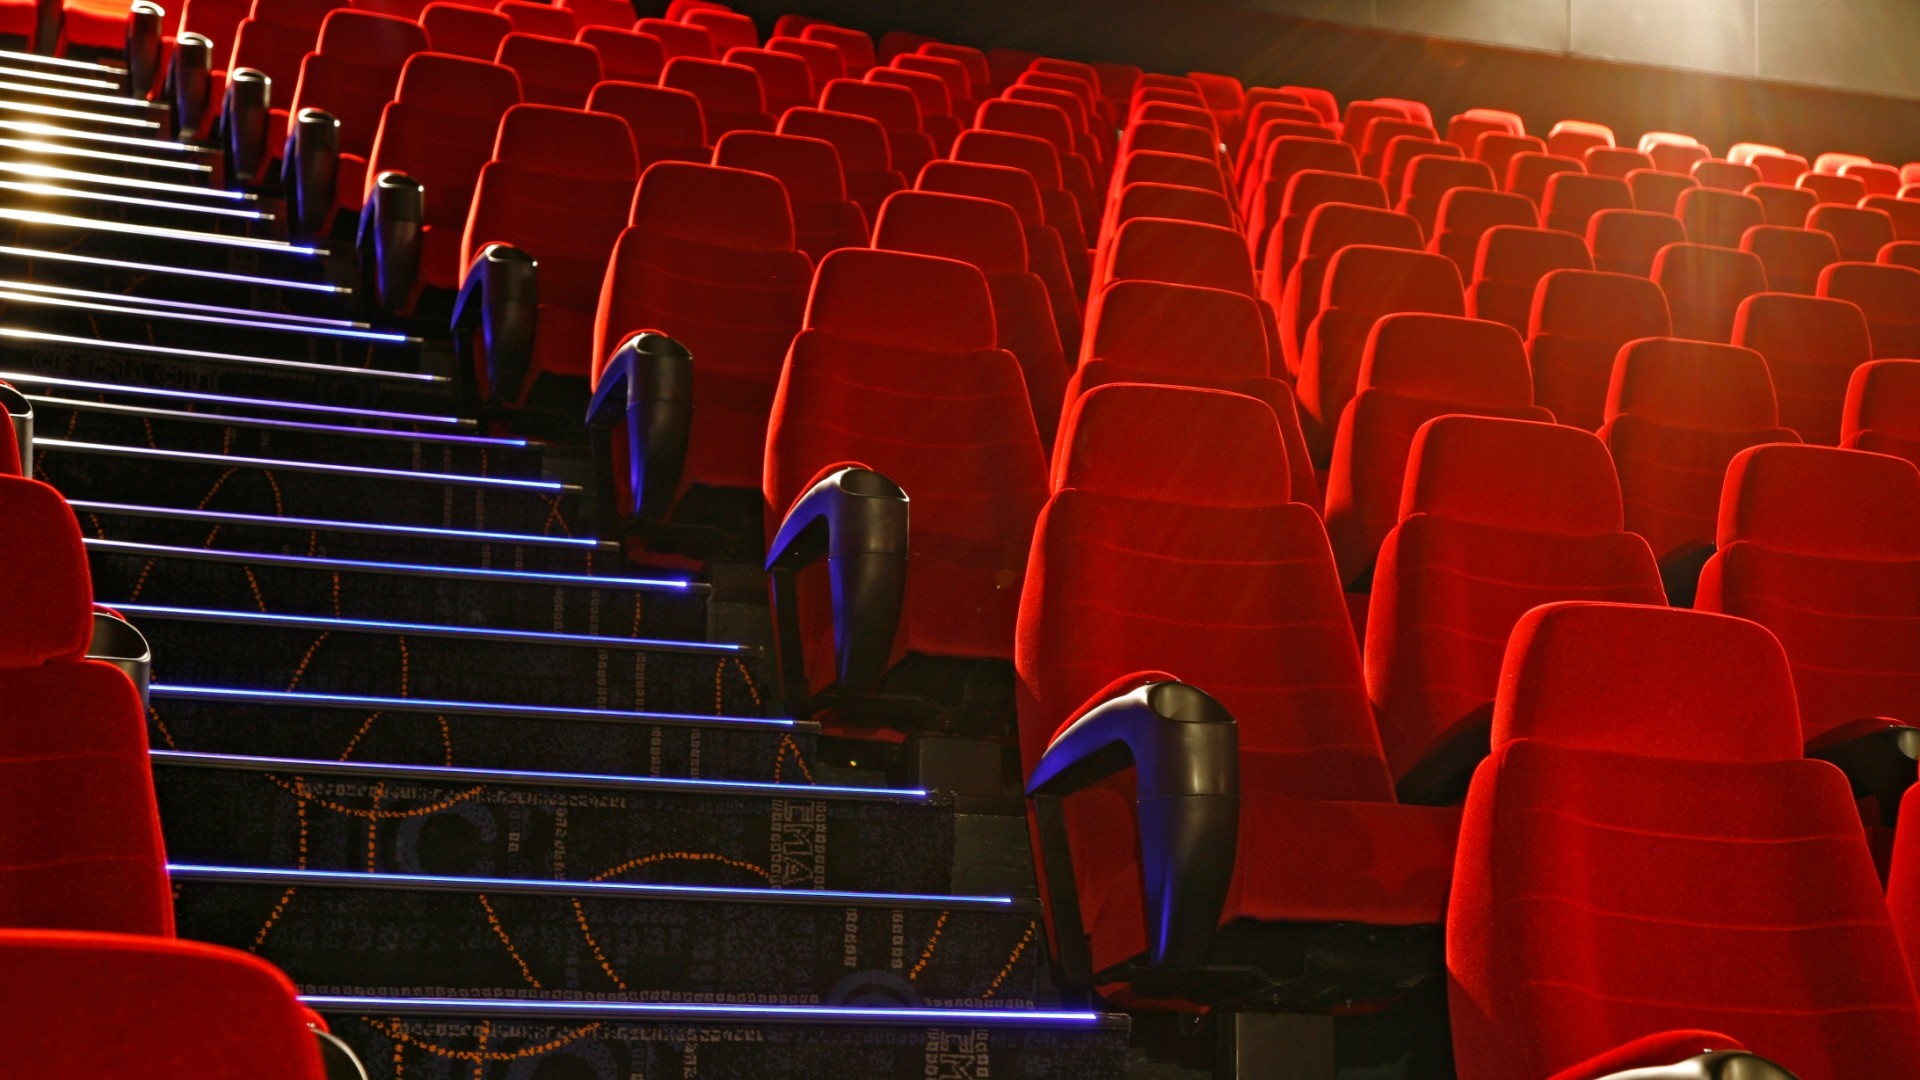 1920x1080 Movie Theater Seats wallpaper - 405655